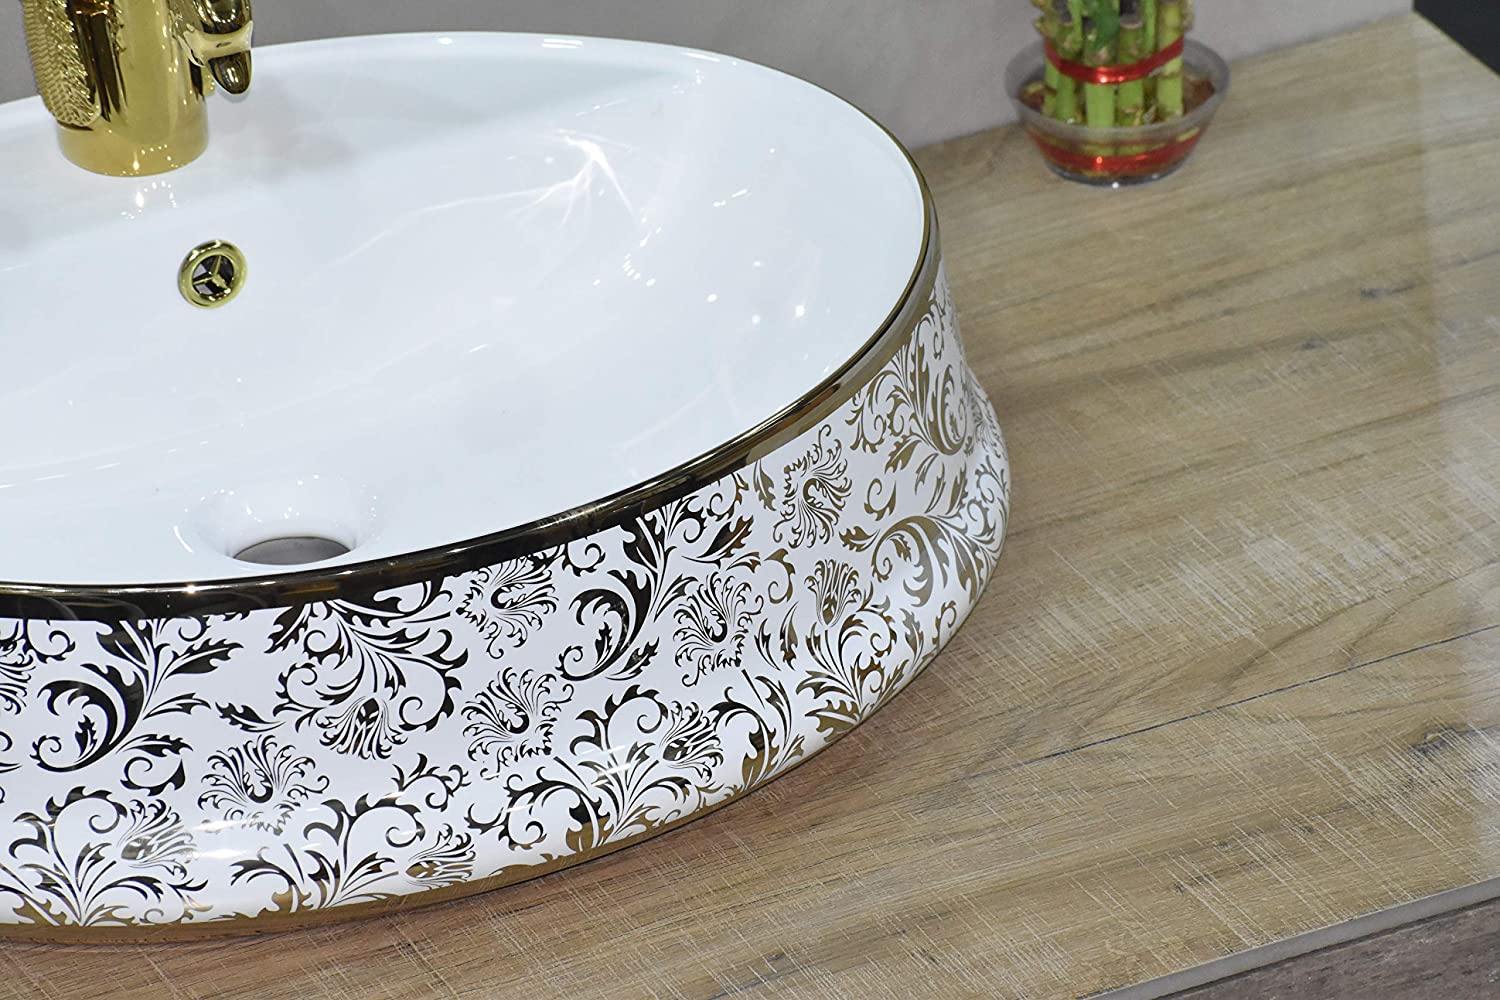 Ceramic Premium Designer Table Top Over Counter Vessel Sink Wash Basin for Bathroom 22 x 17.5 x 6 Inch Oval Shape in Golden Color Floral Pattern - Bath Outlet